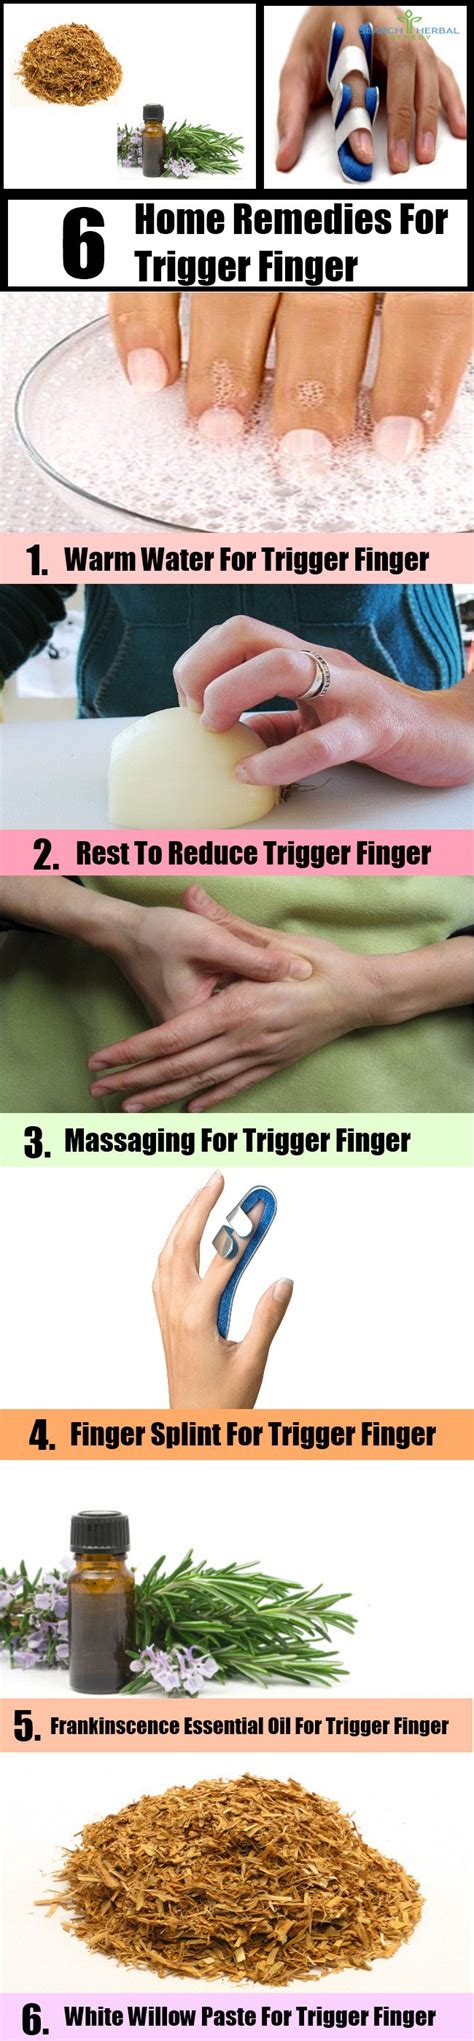 Remedies for Trigger Finger2 | Hands/Arms | Trigger finger treatment ...